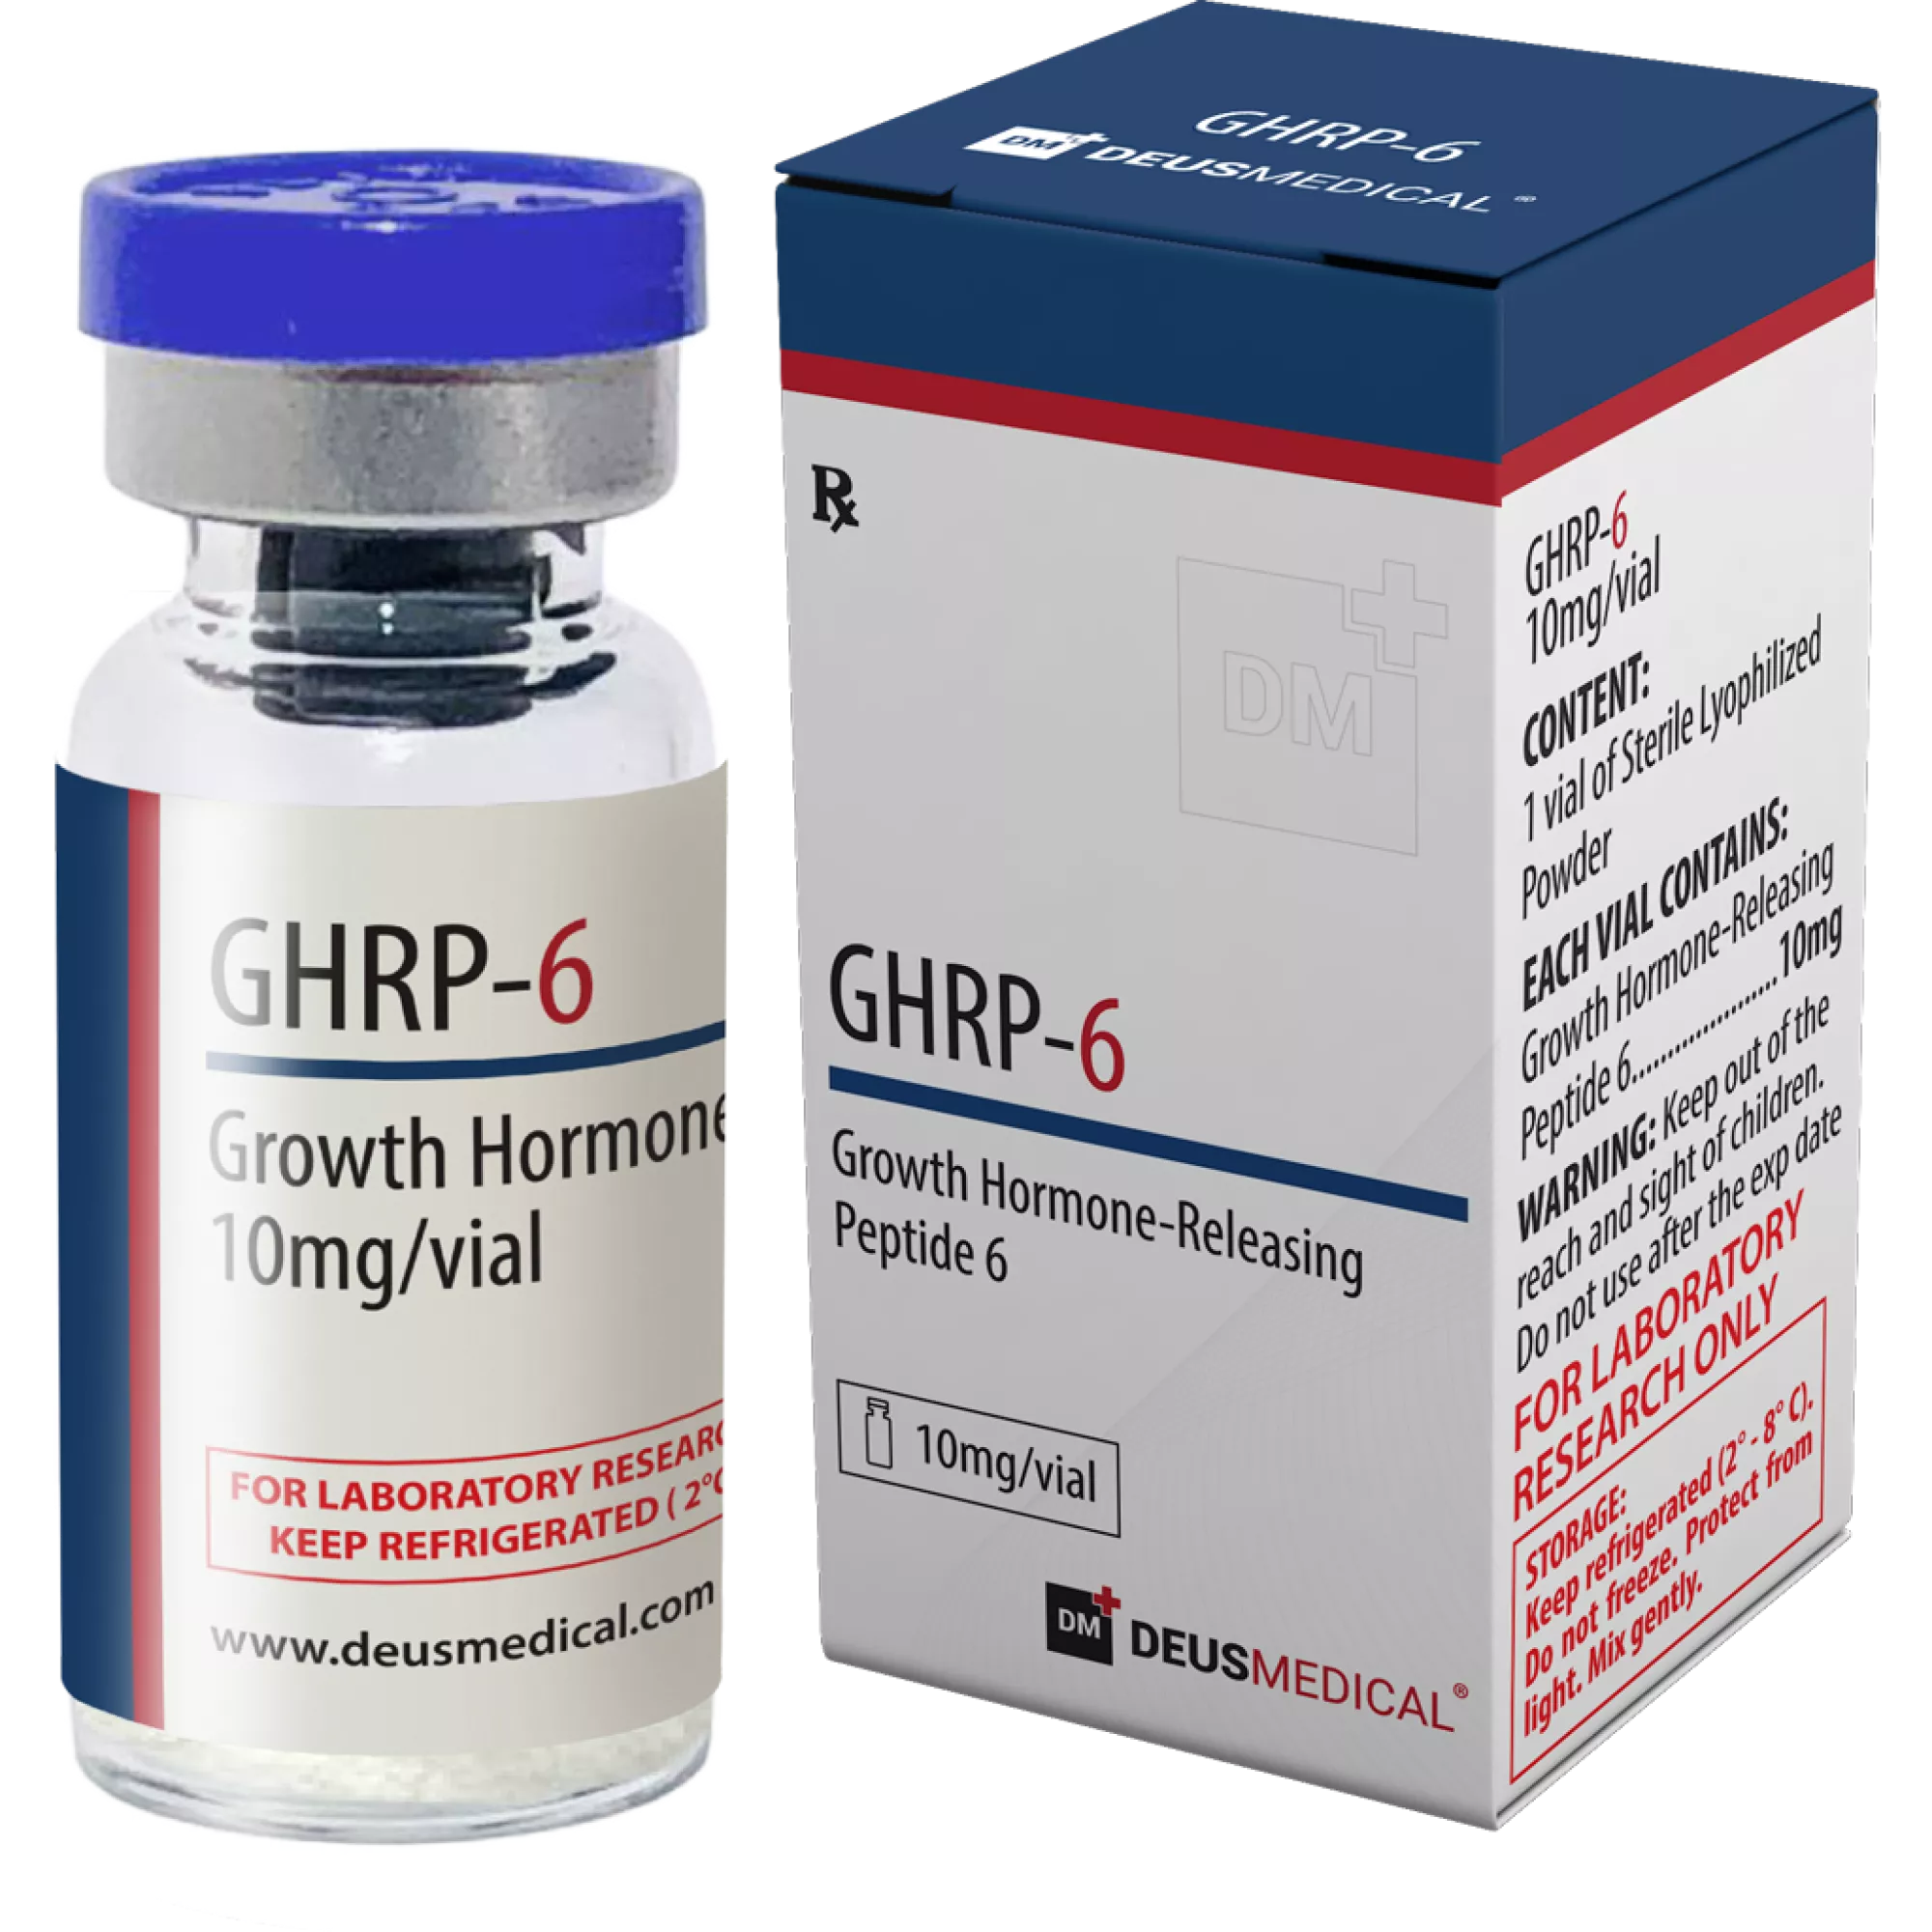 GHRP-6 (Growth Hormone-Releasing Peptide 6), Deus Medical, Buy Steroids Online - www.deuspower.shop